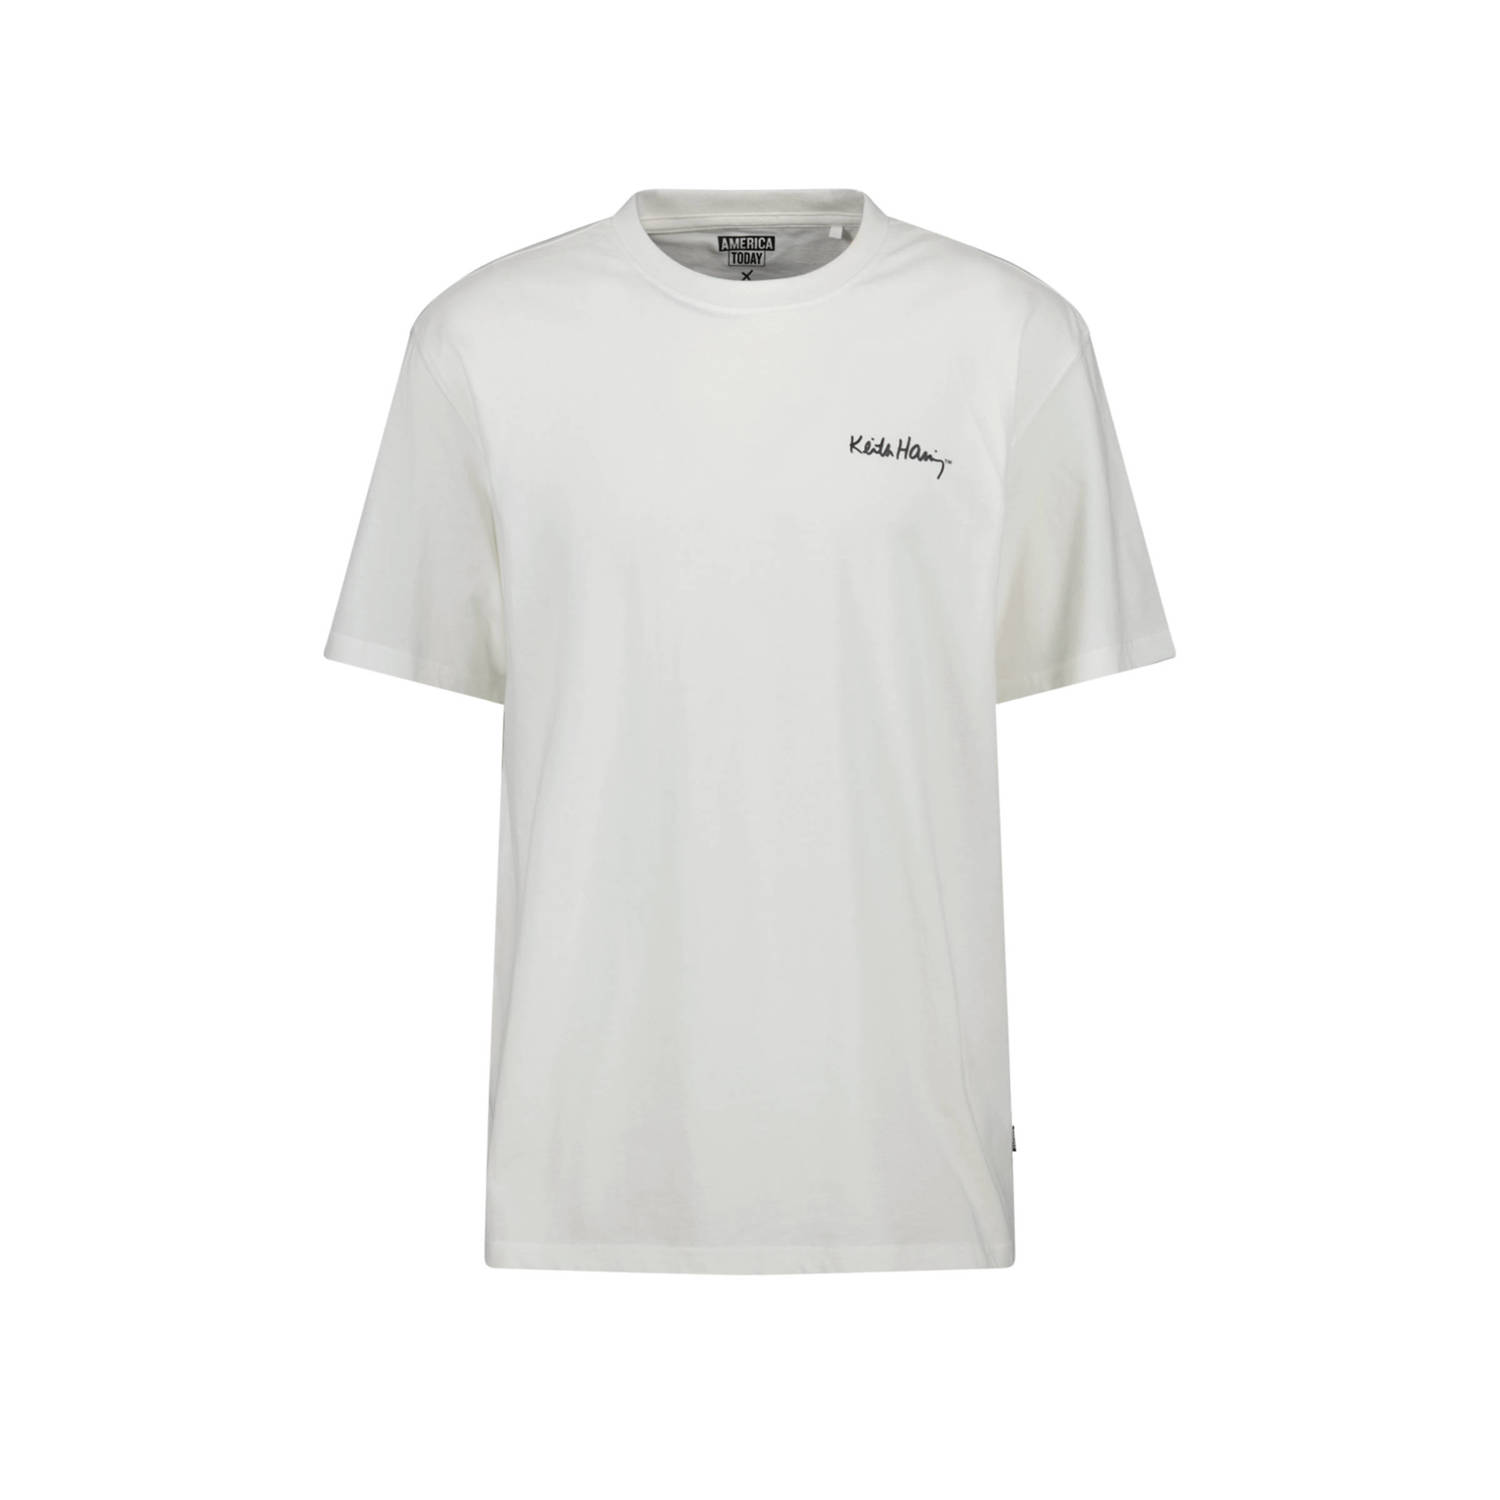 America Today oversized T-shirt Emery met backprint off white